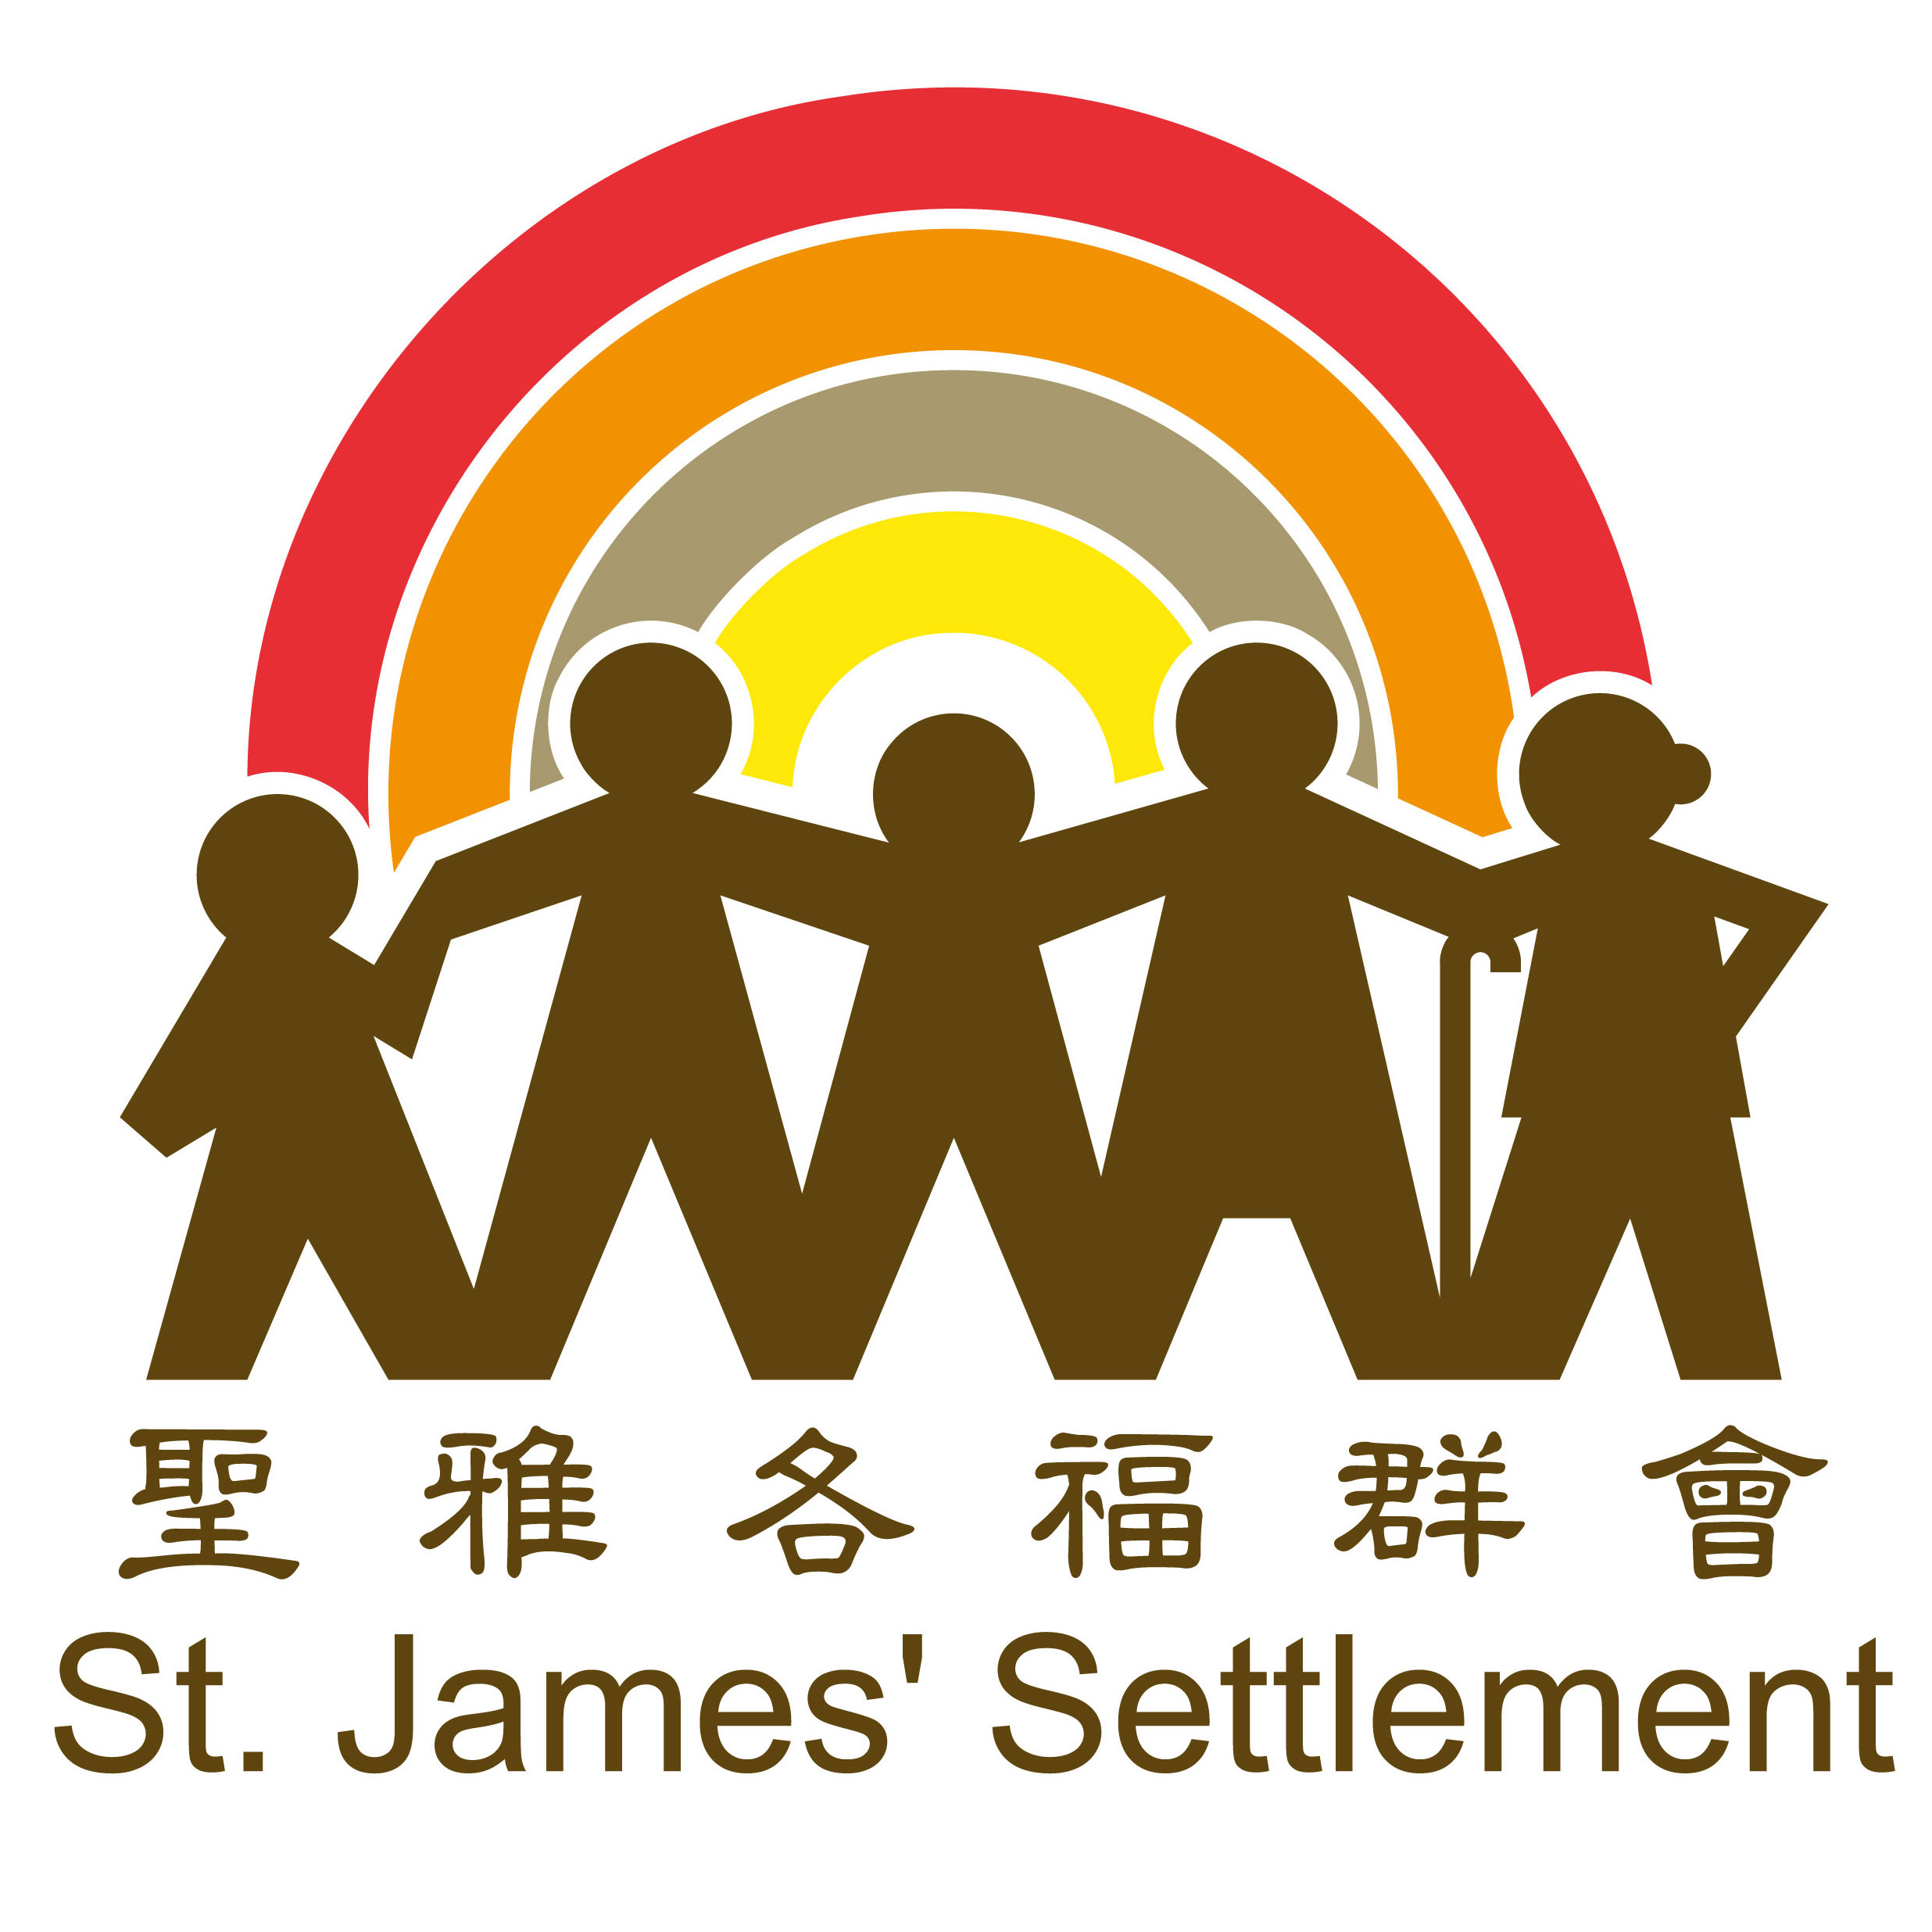 St. James Settlements